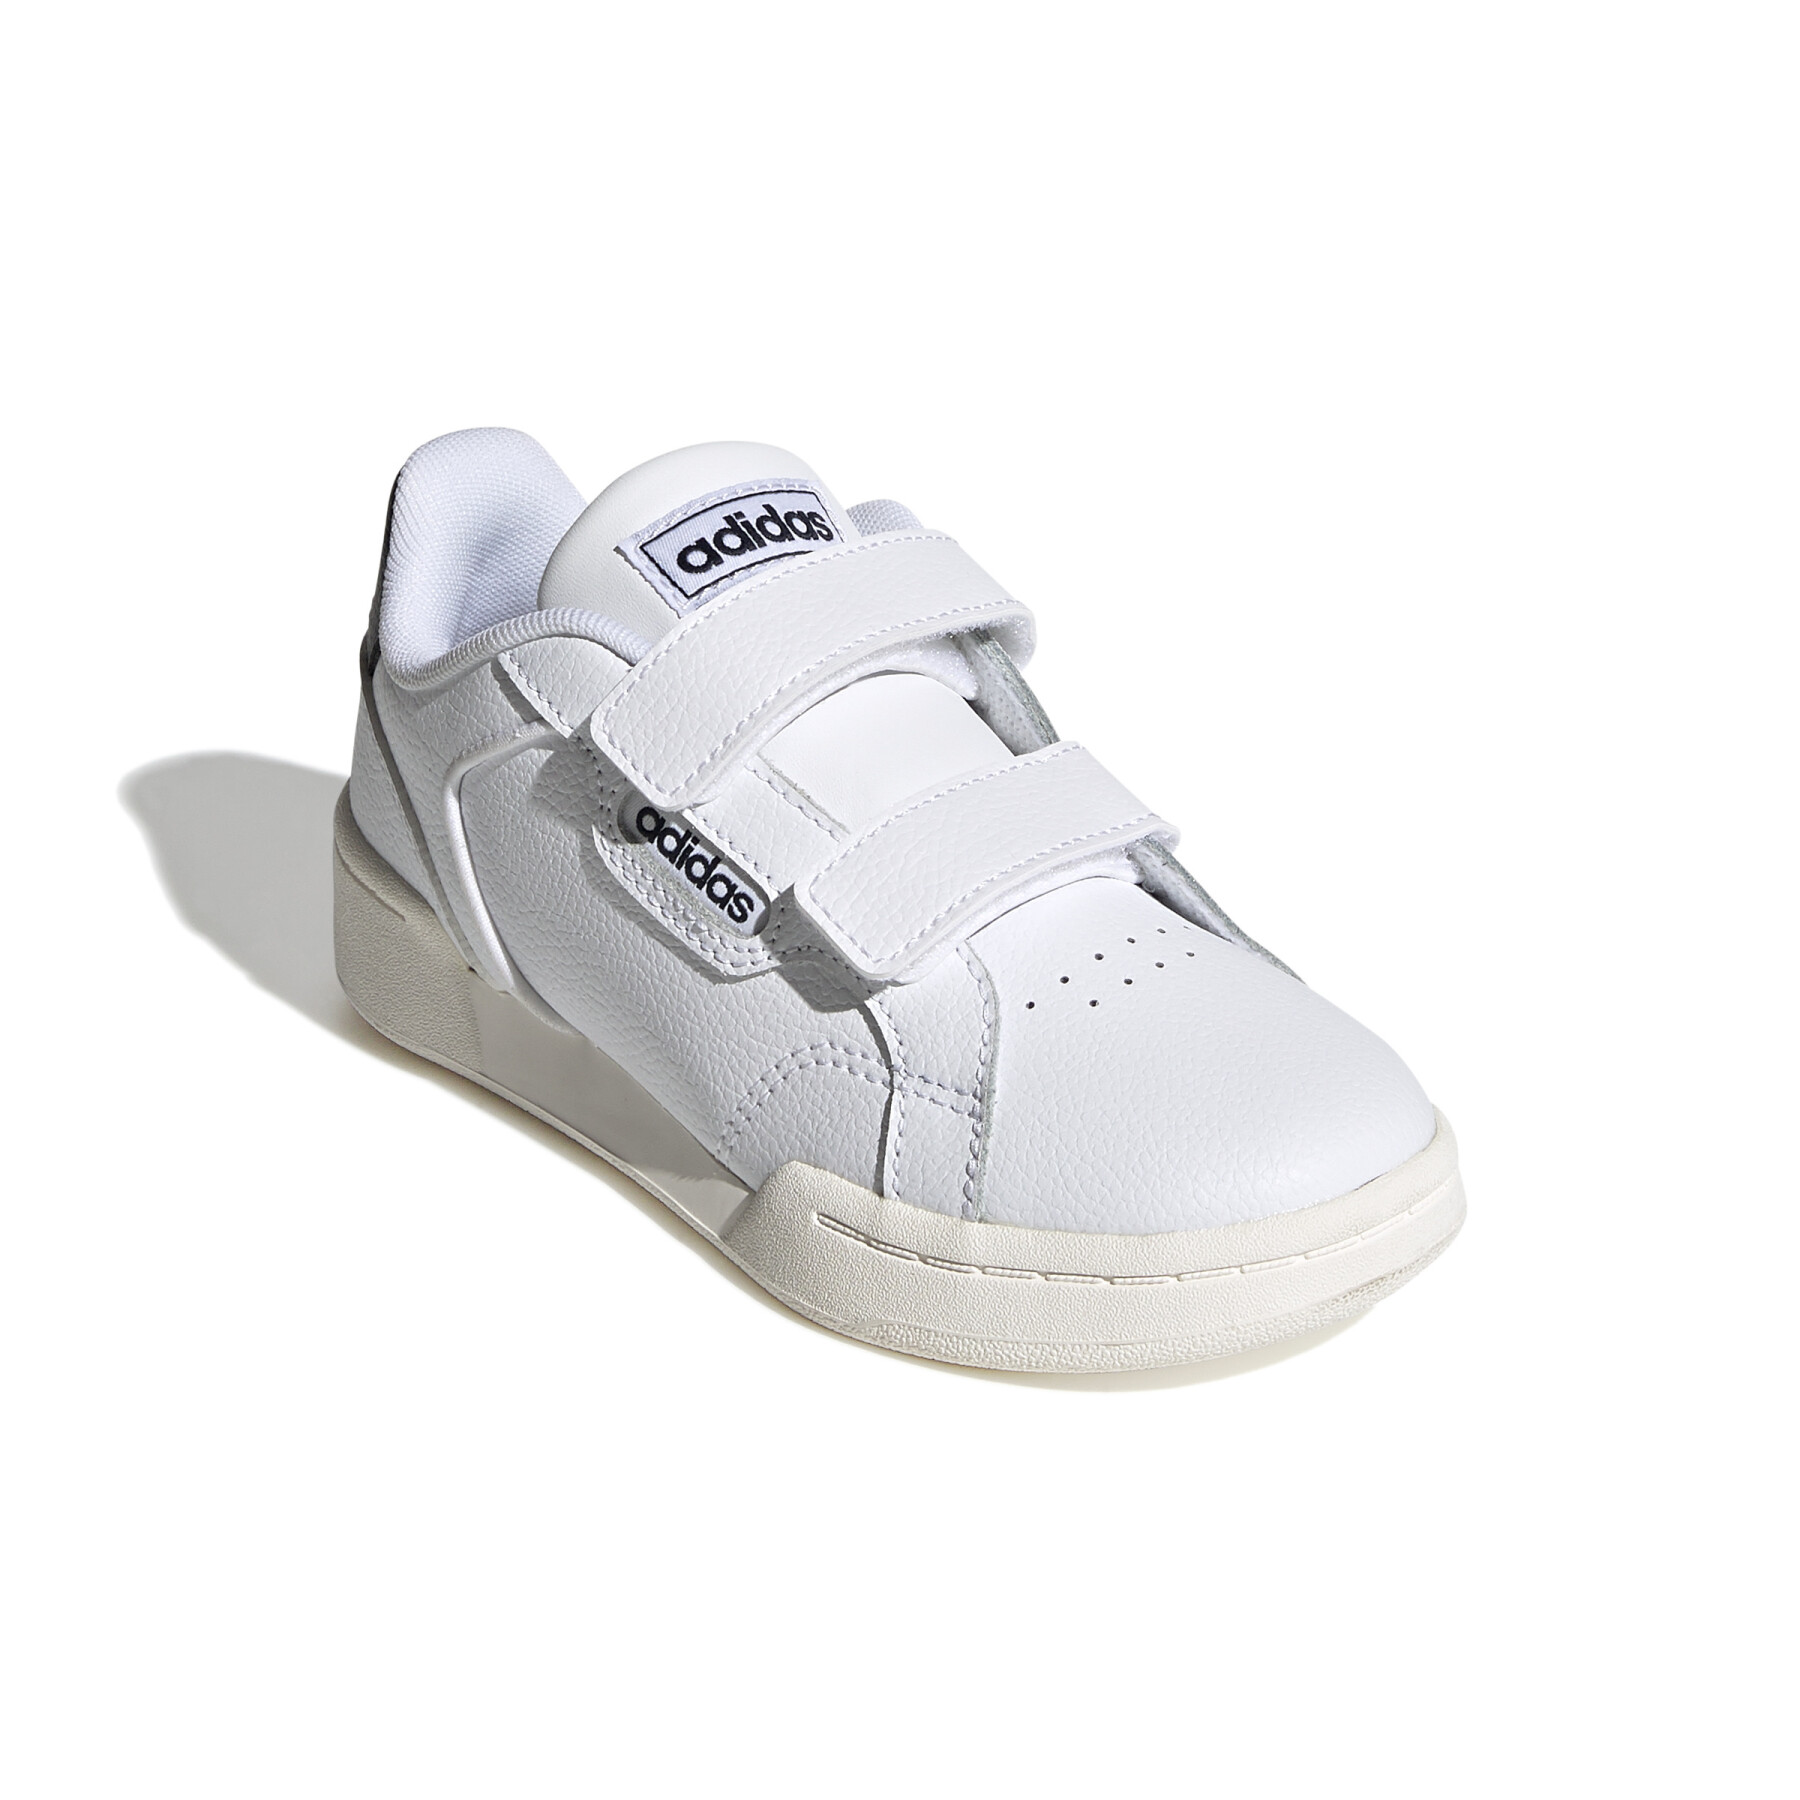 Children's sneakers adidas Roguera C